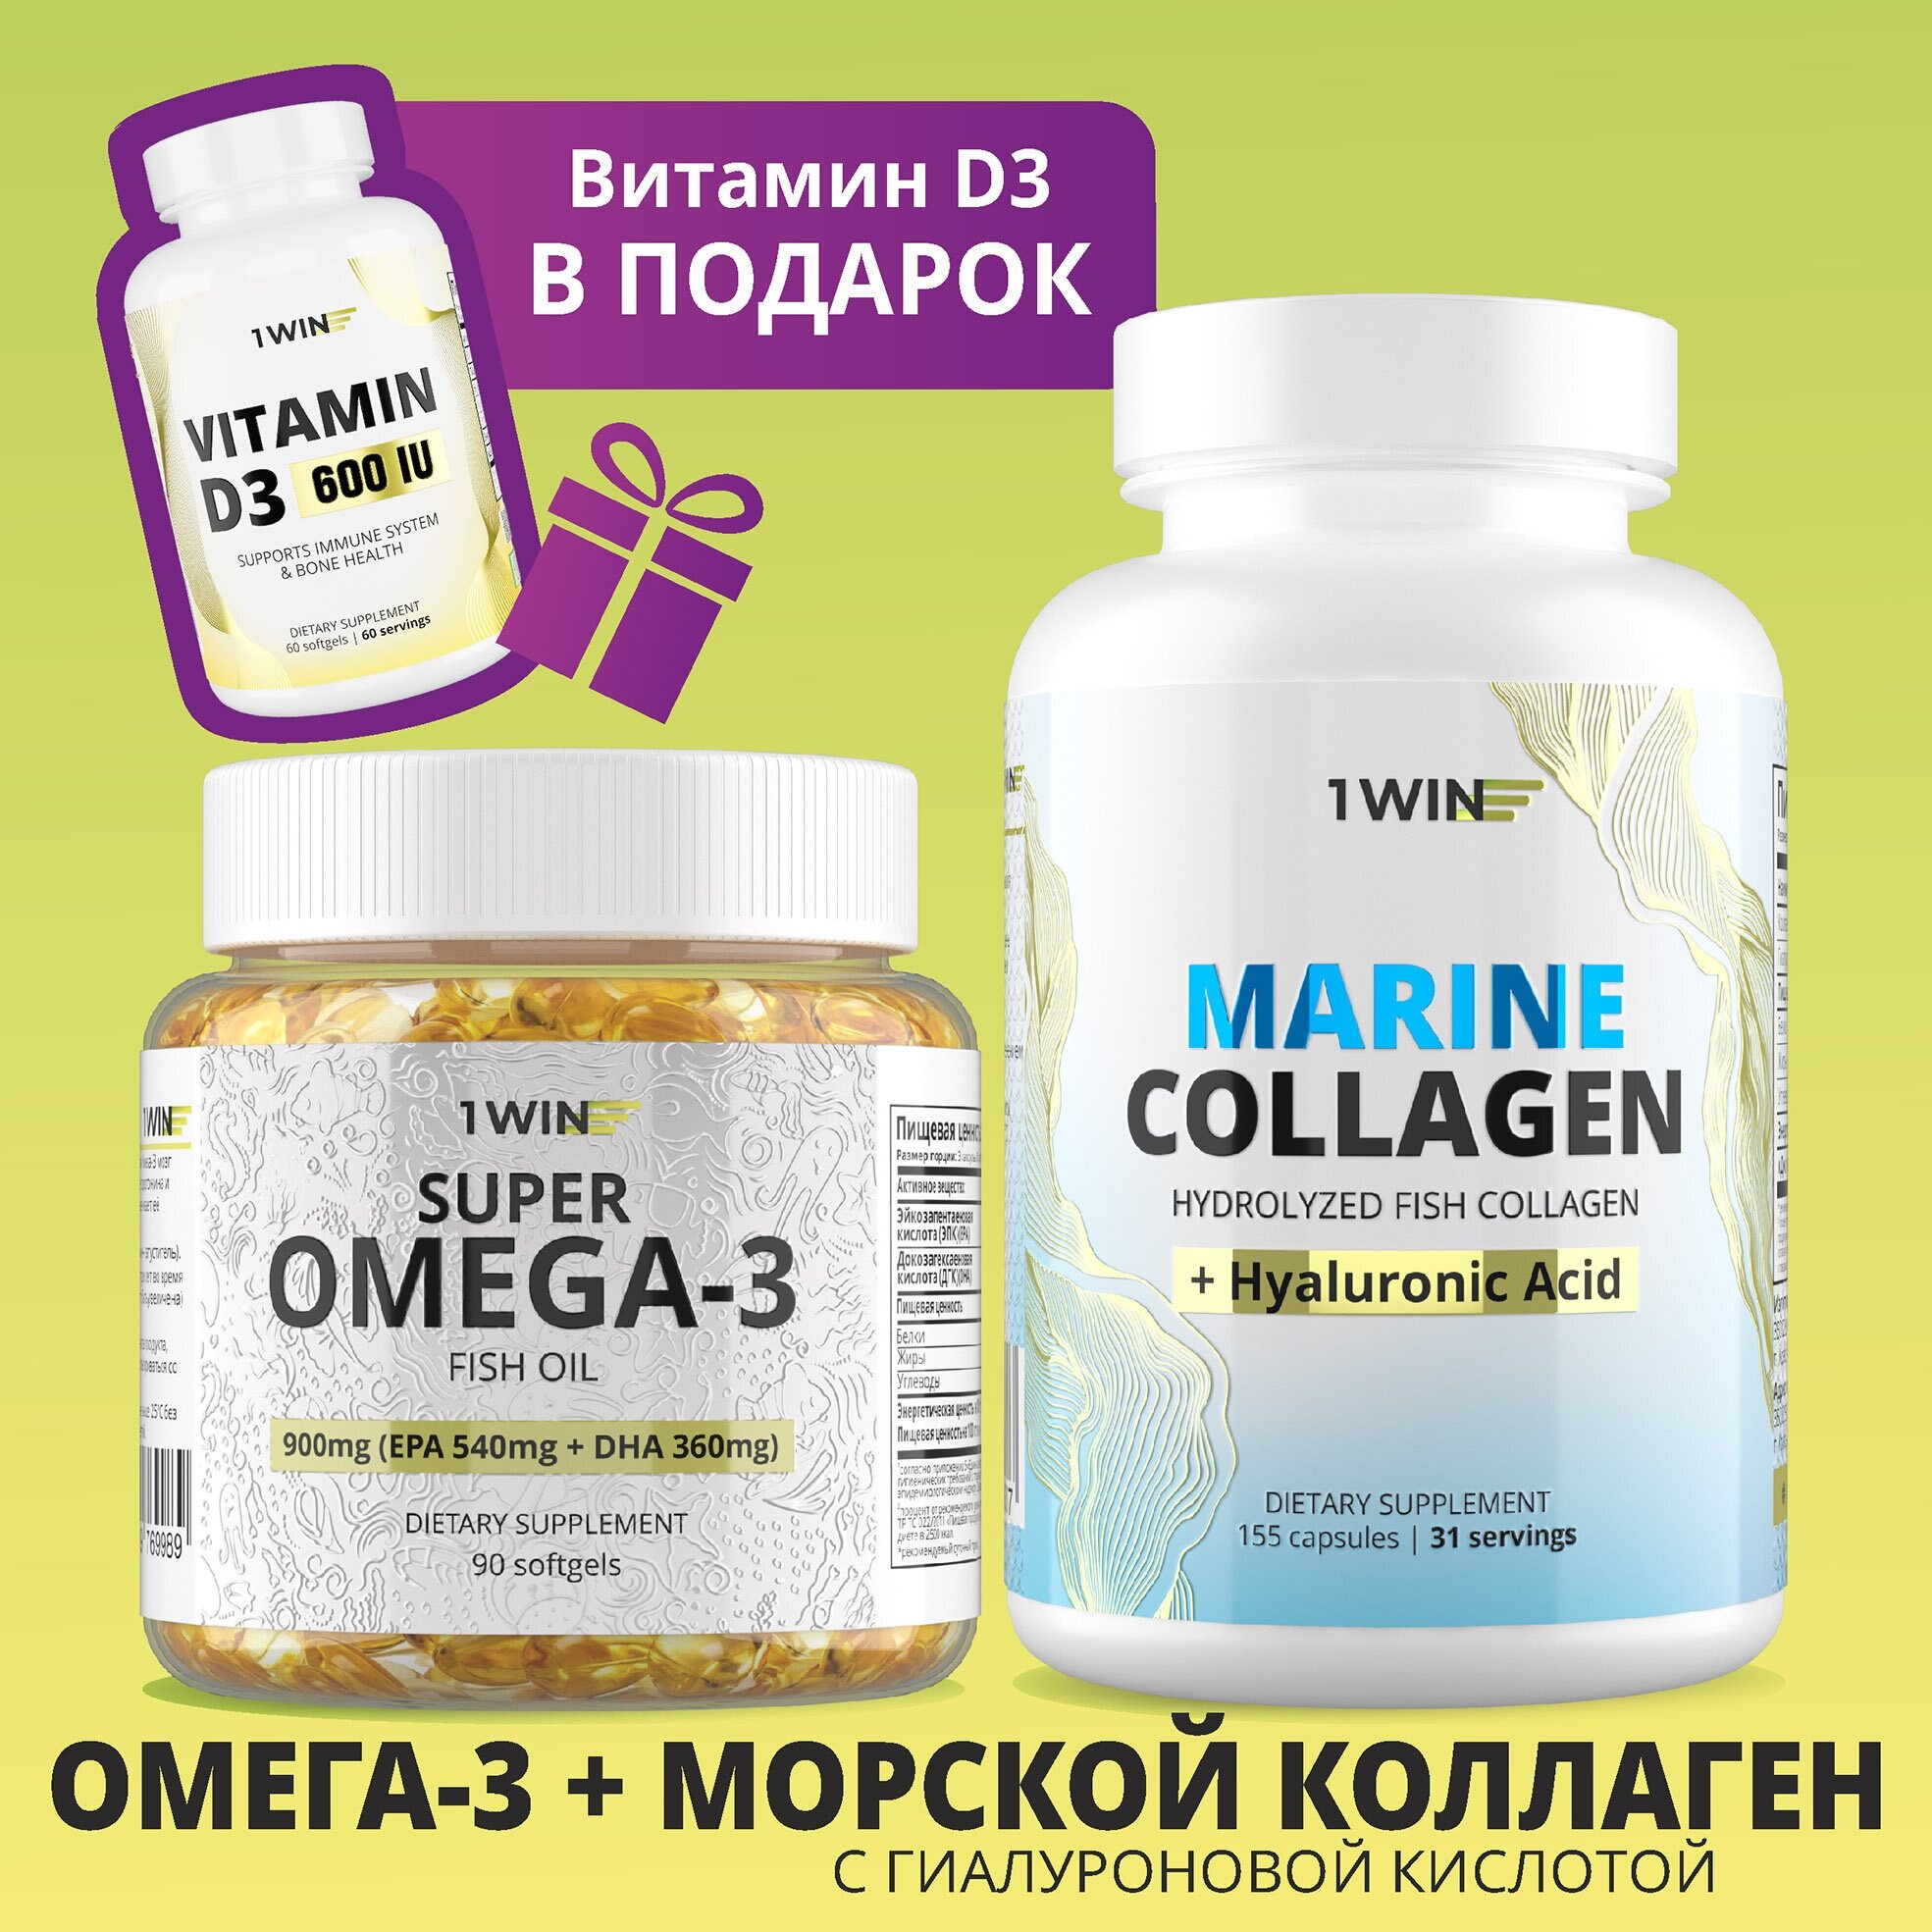 1WIN Набор витаминов: омега 3, коллаген морской с гиалуроновой кислотой + подарок витамин Д3